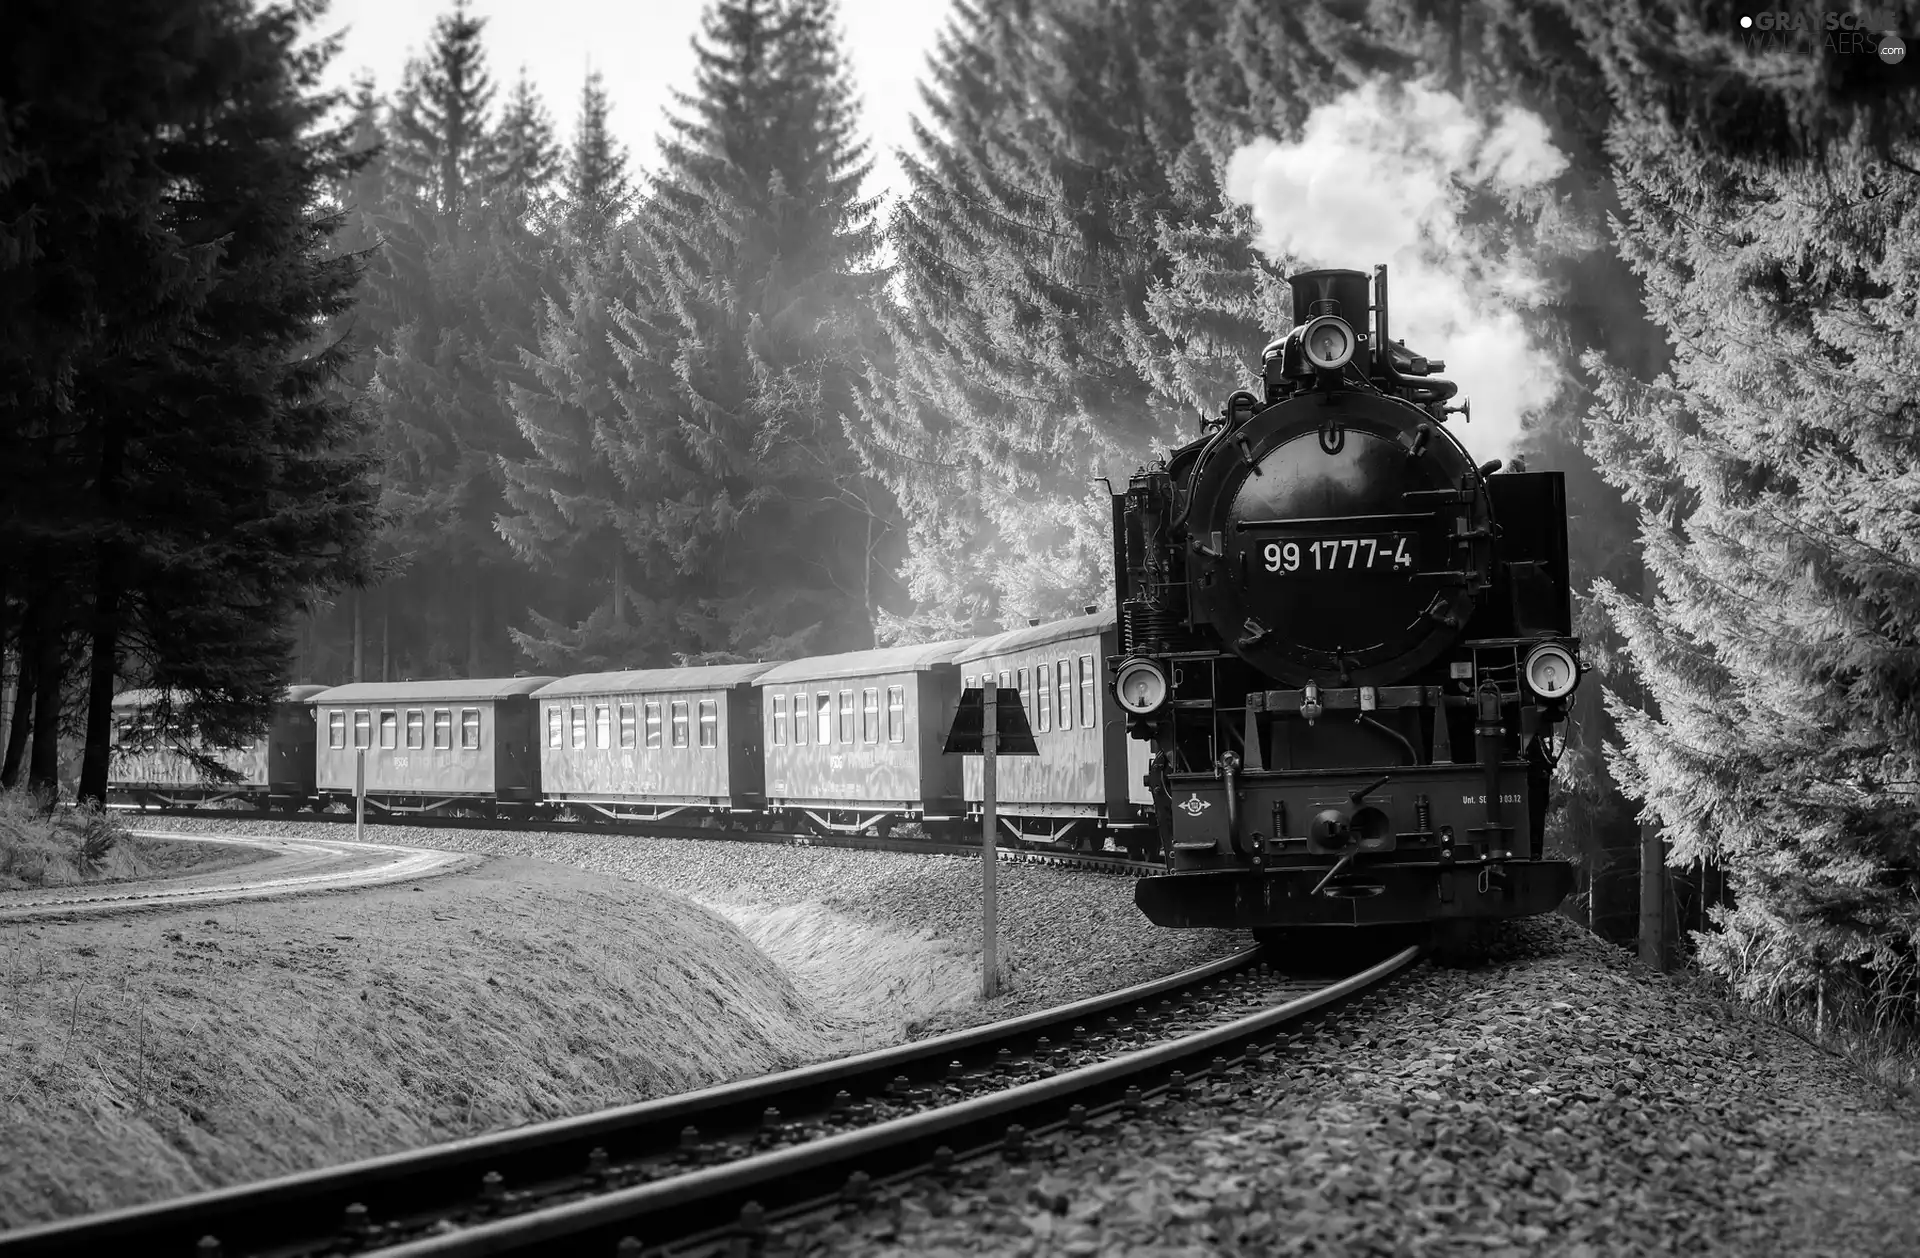 Wagons, forest, ##, locomotive, Train